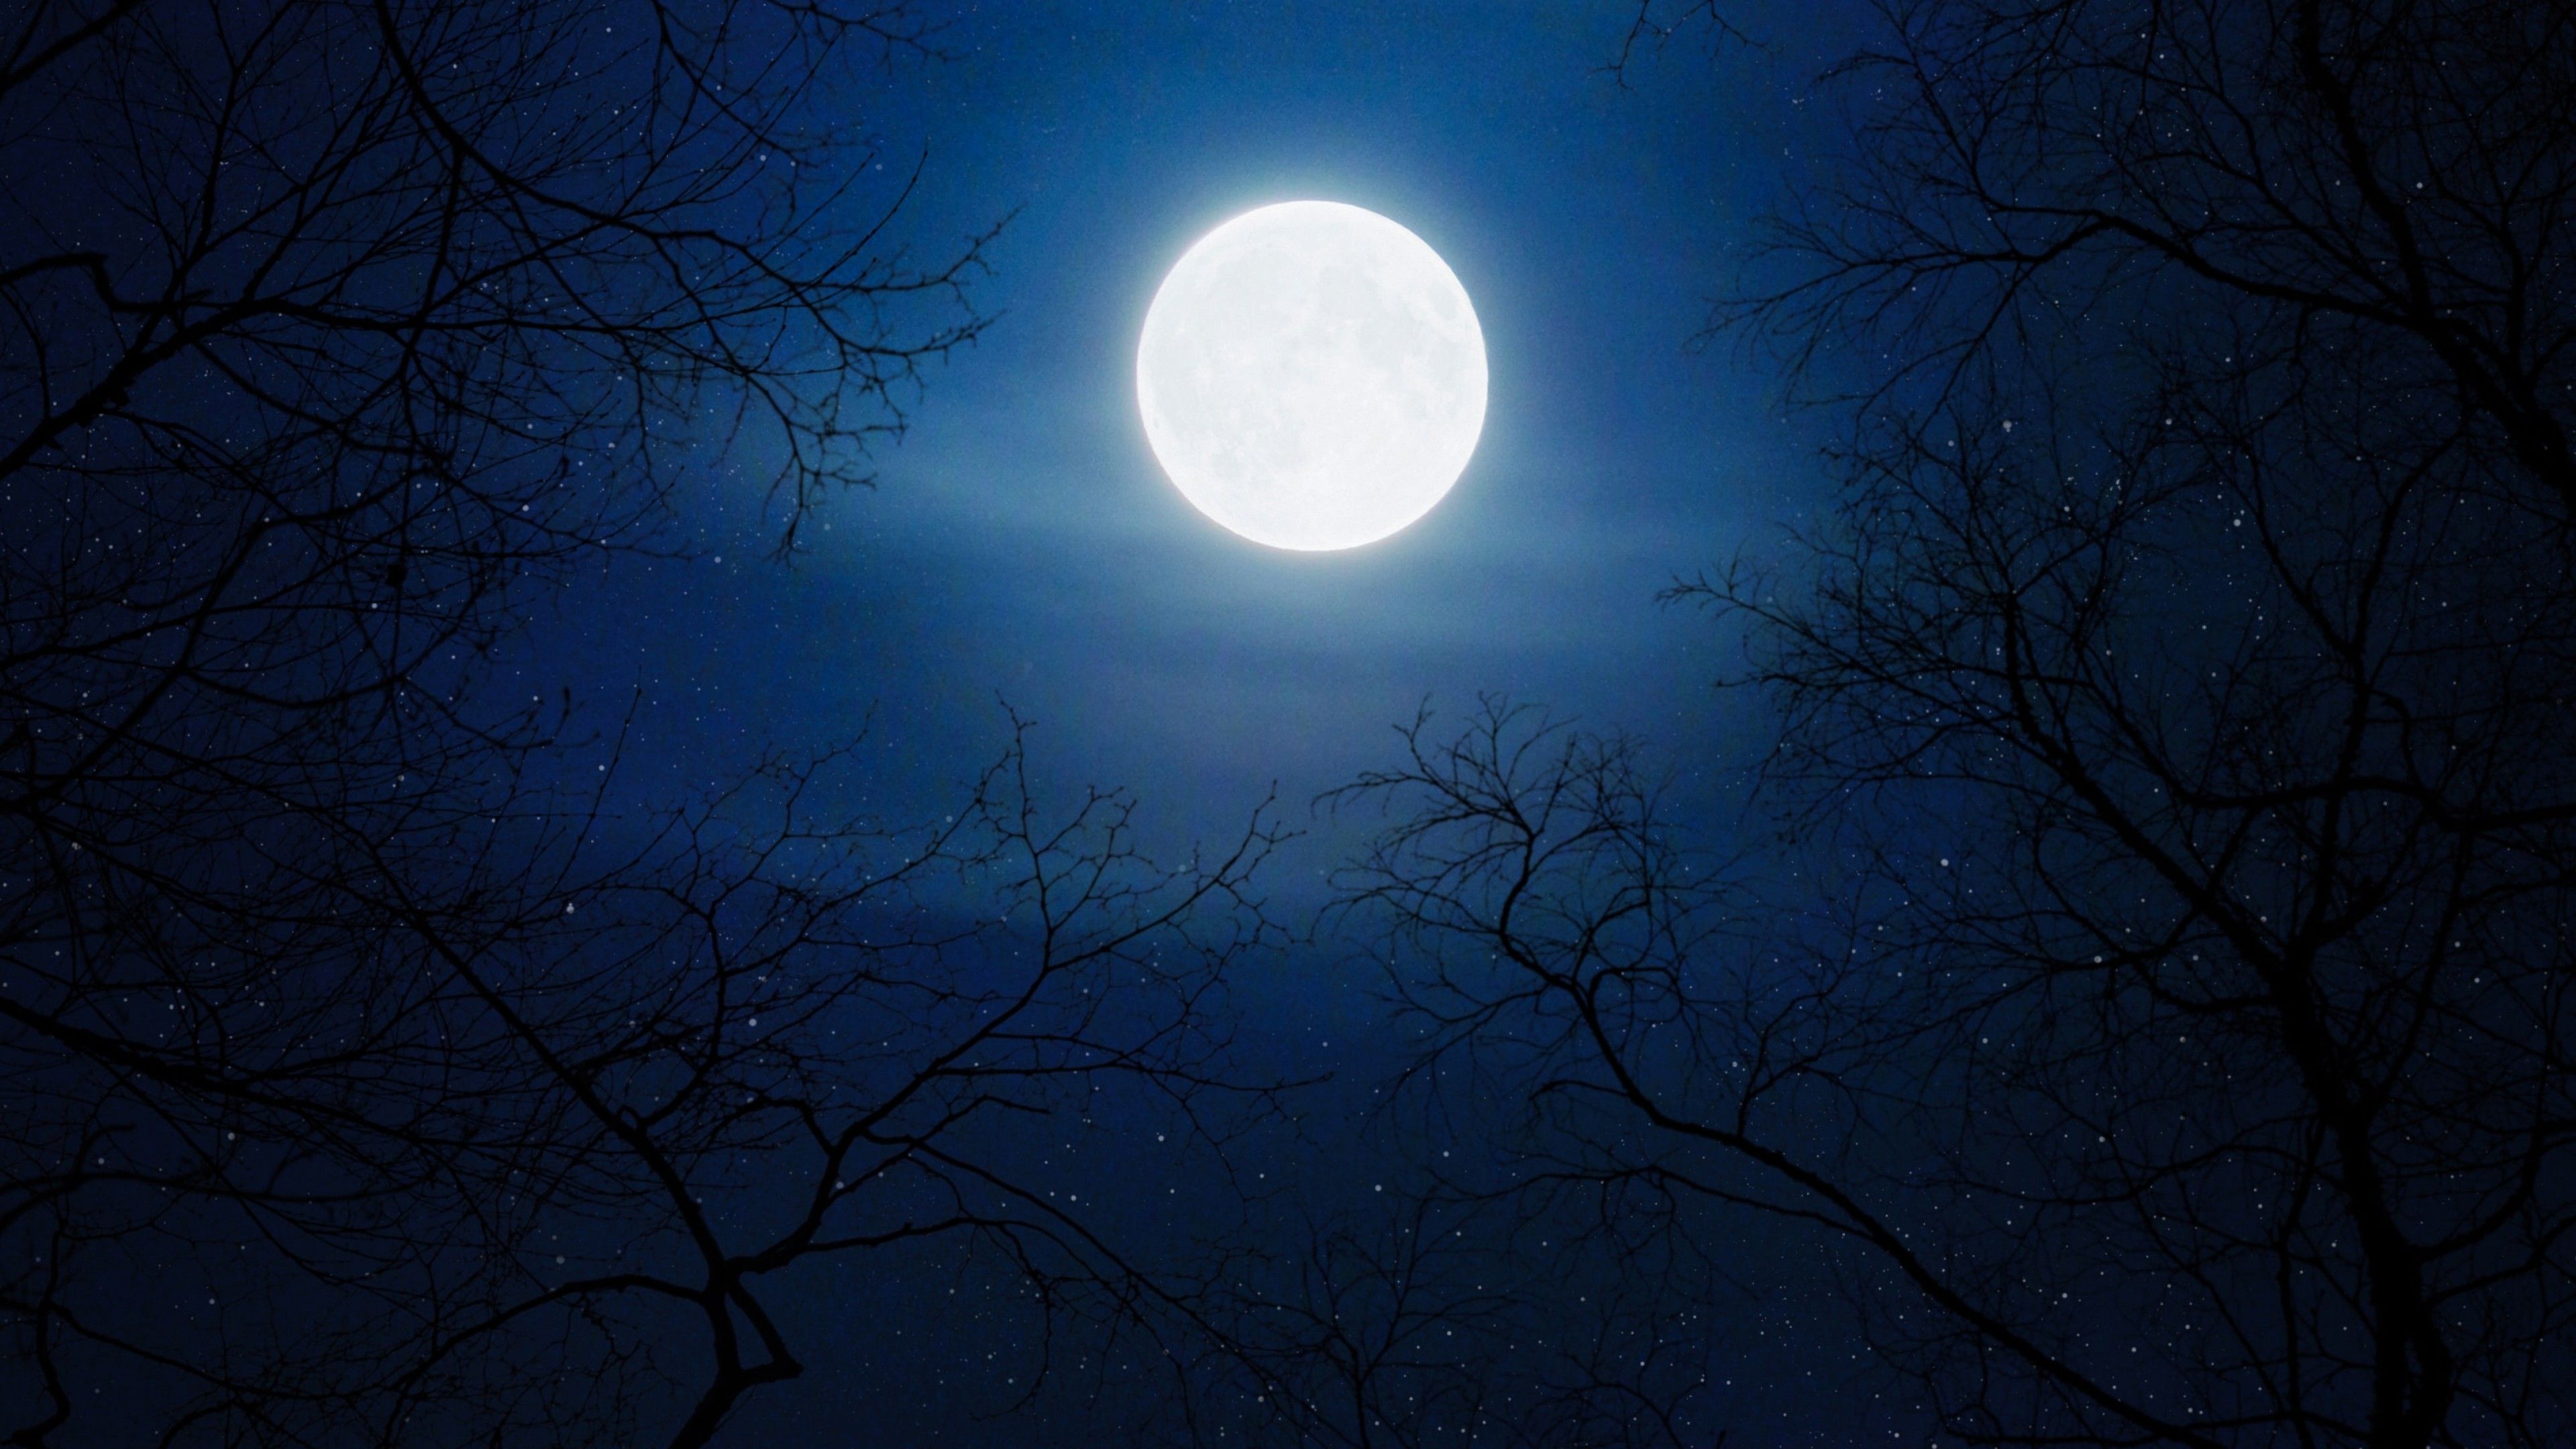 Moon 4K Wallpaper, Night, Cold, Trees, Blue sky, Full moon, Nature